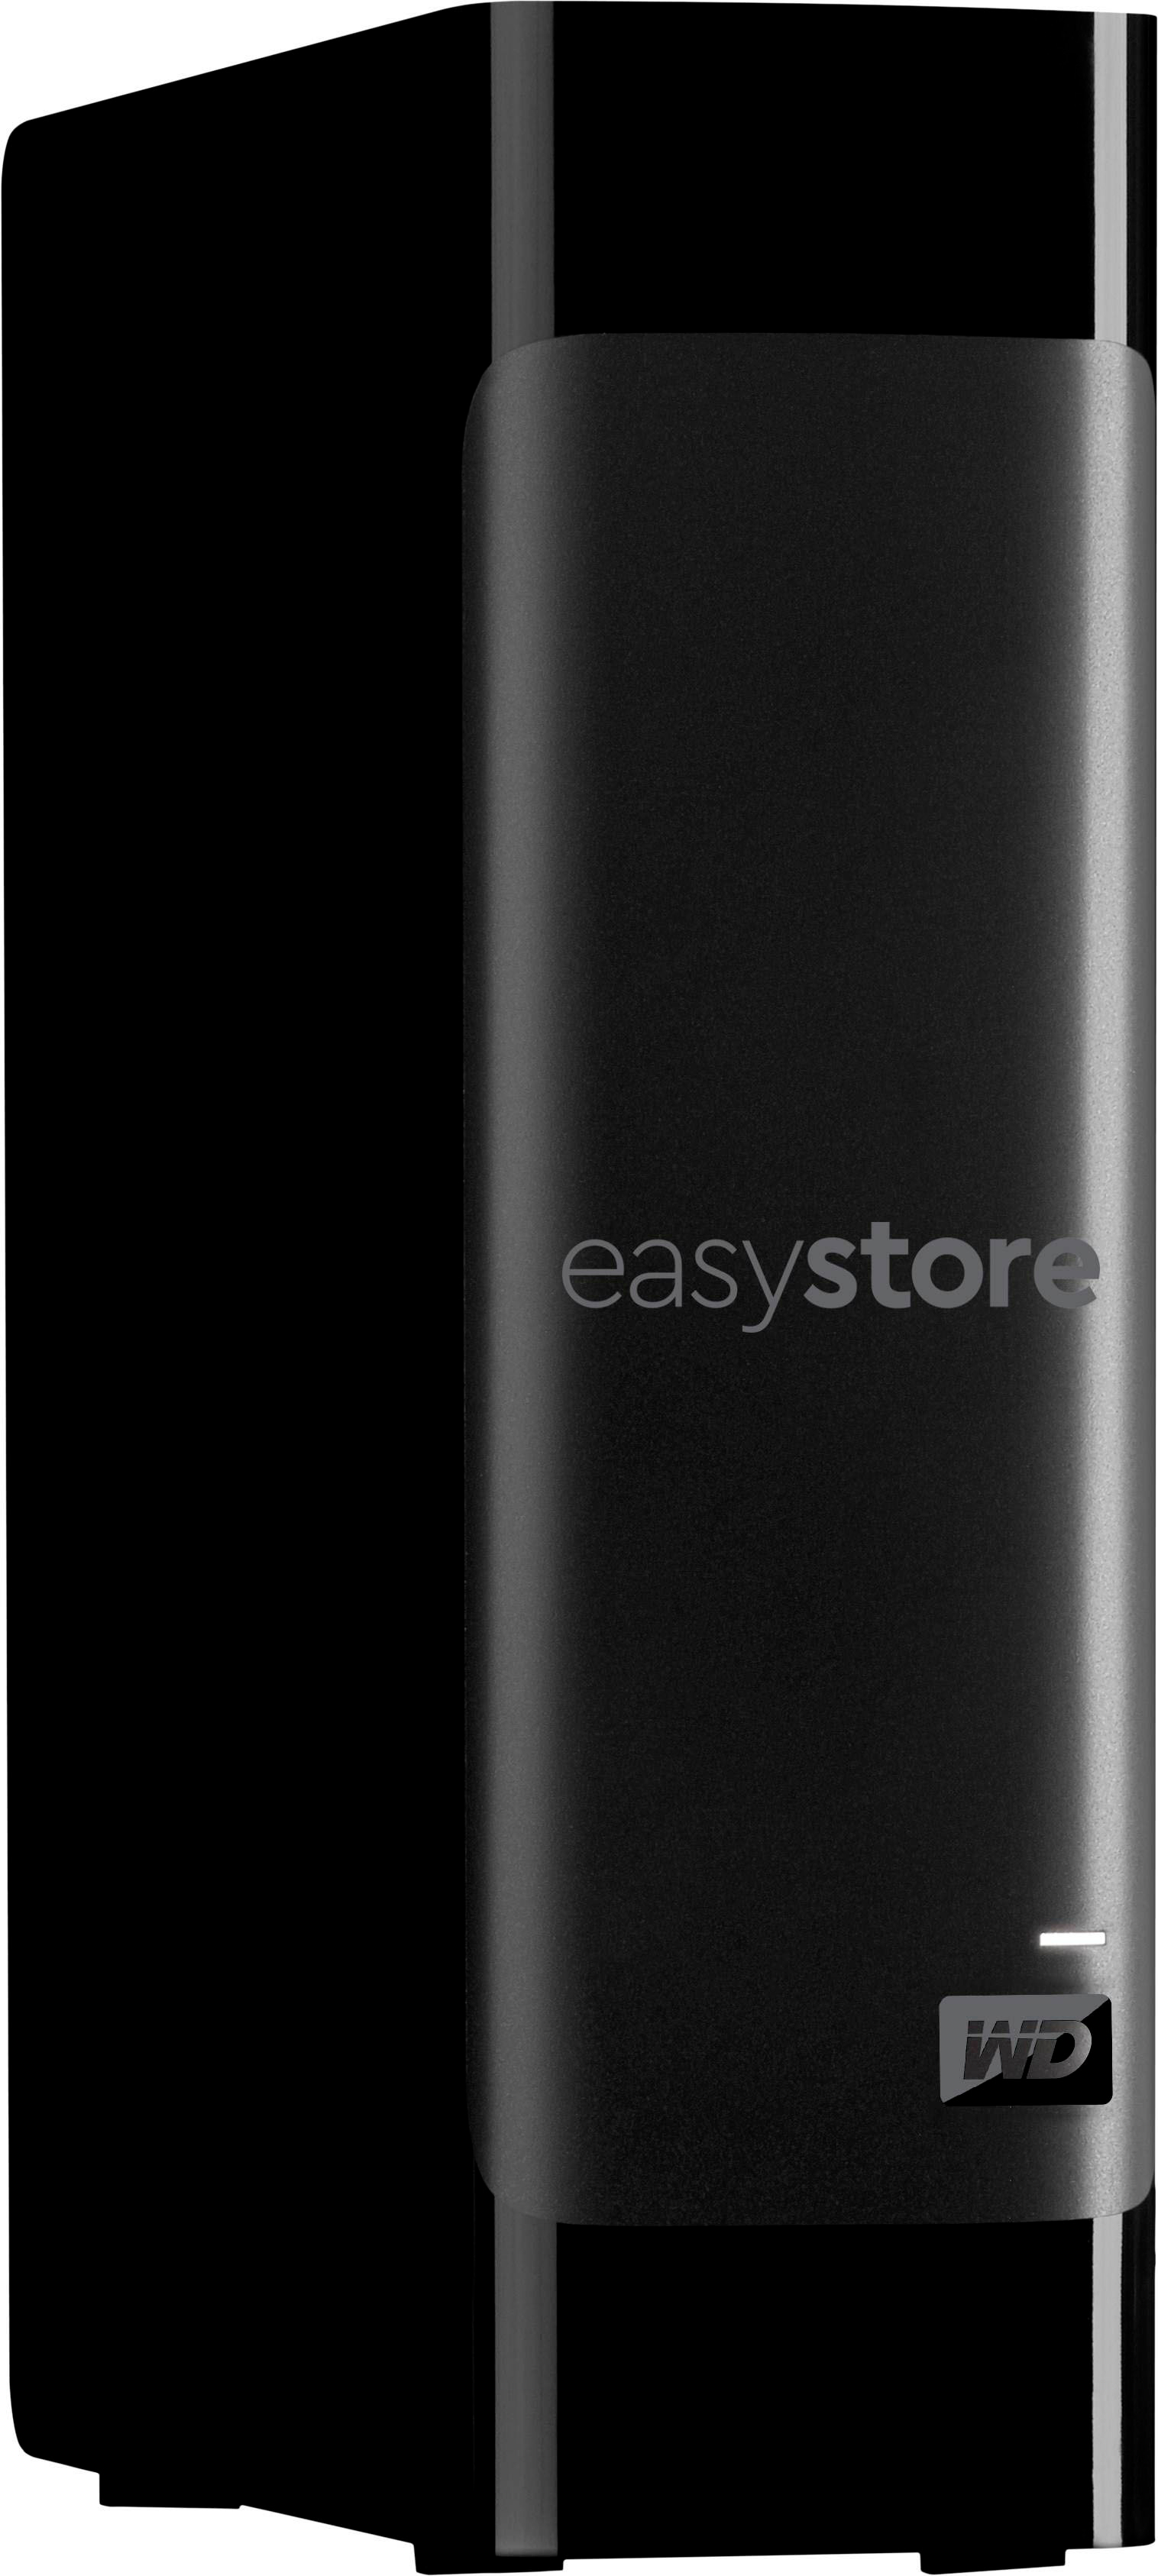 WD easystore 18TB External USB 3.0 Hard Drive Black WDBAMA0180HBK 